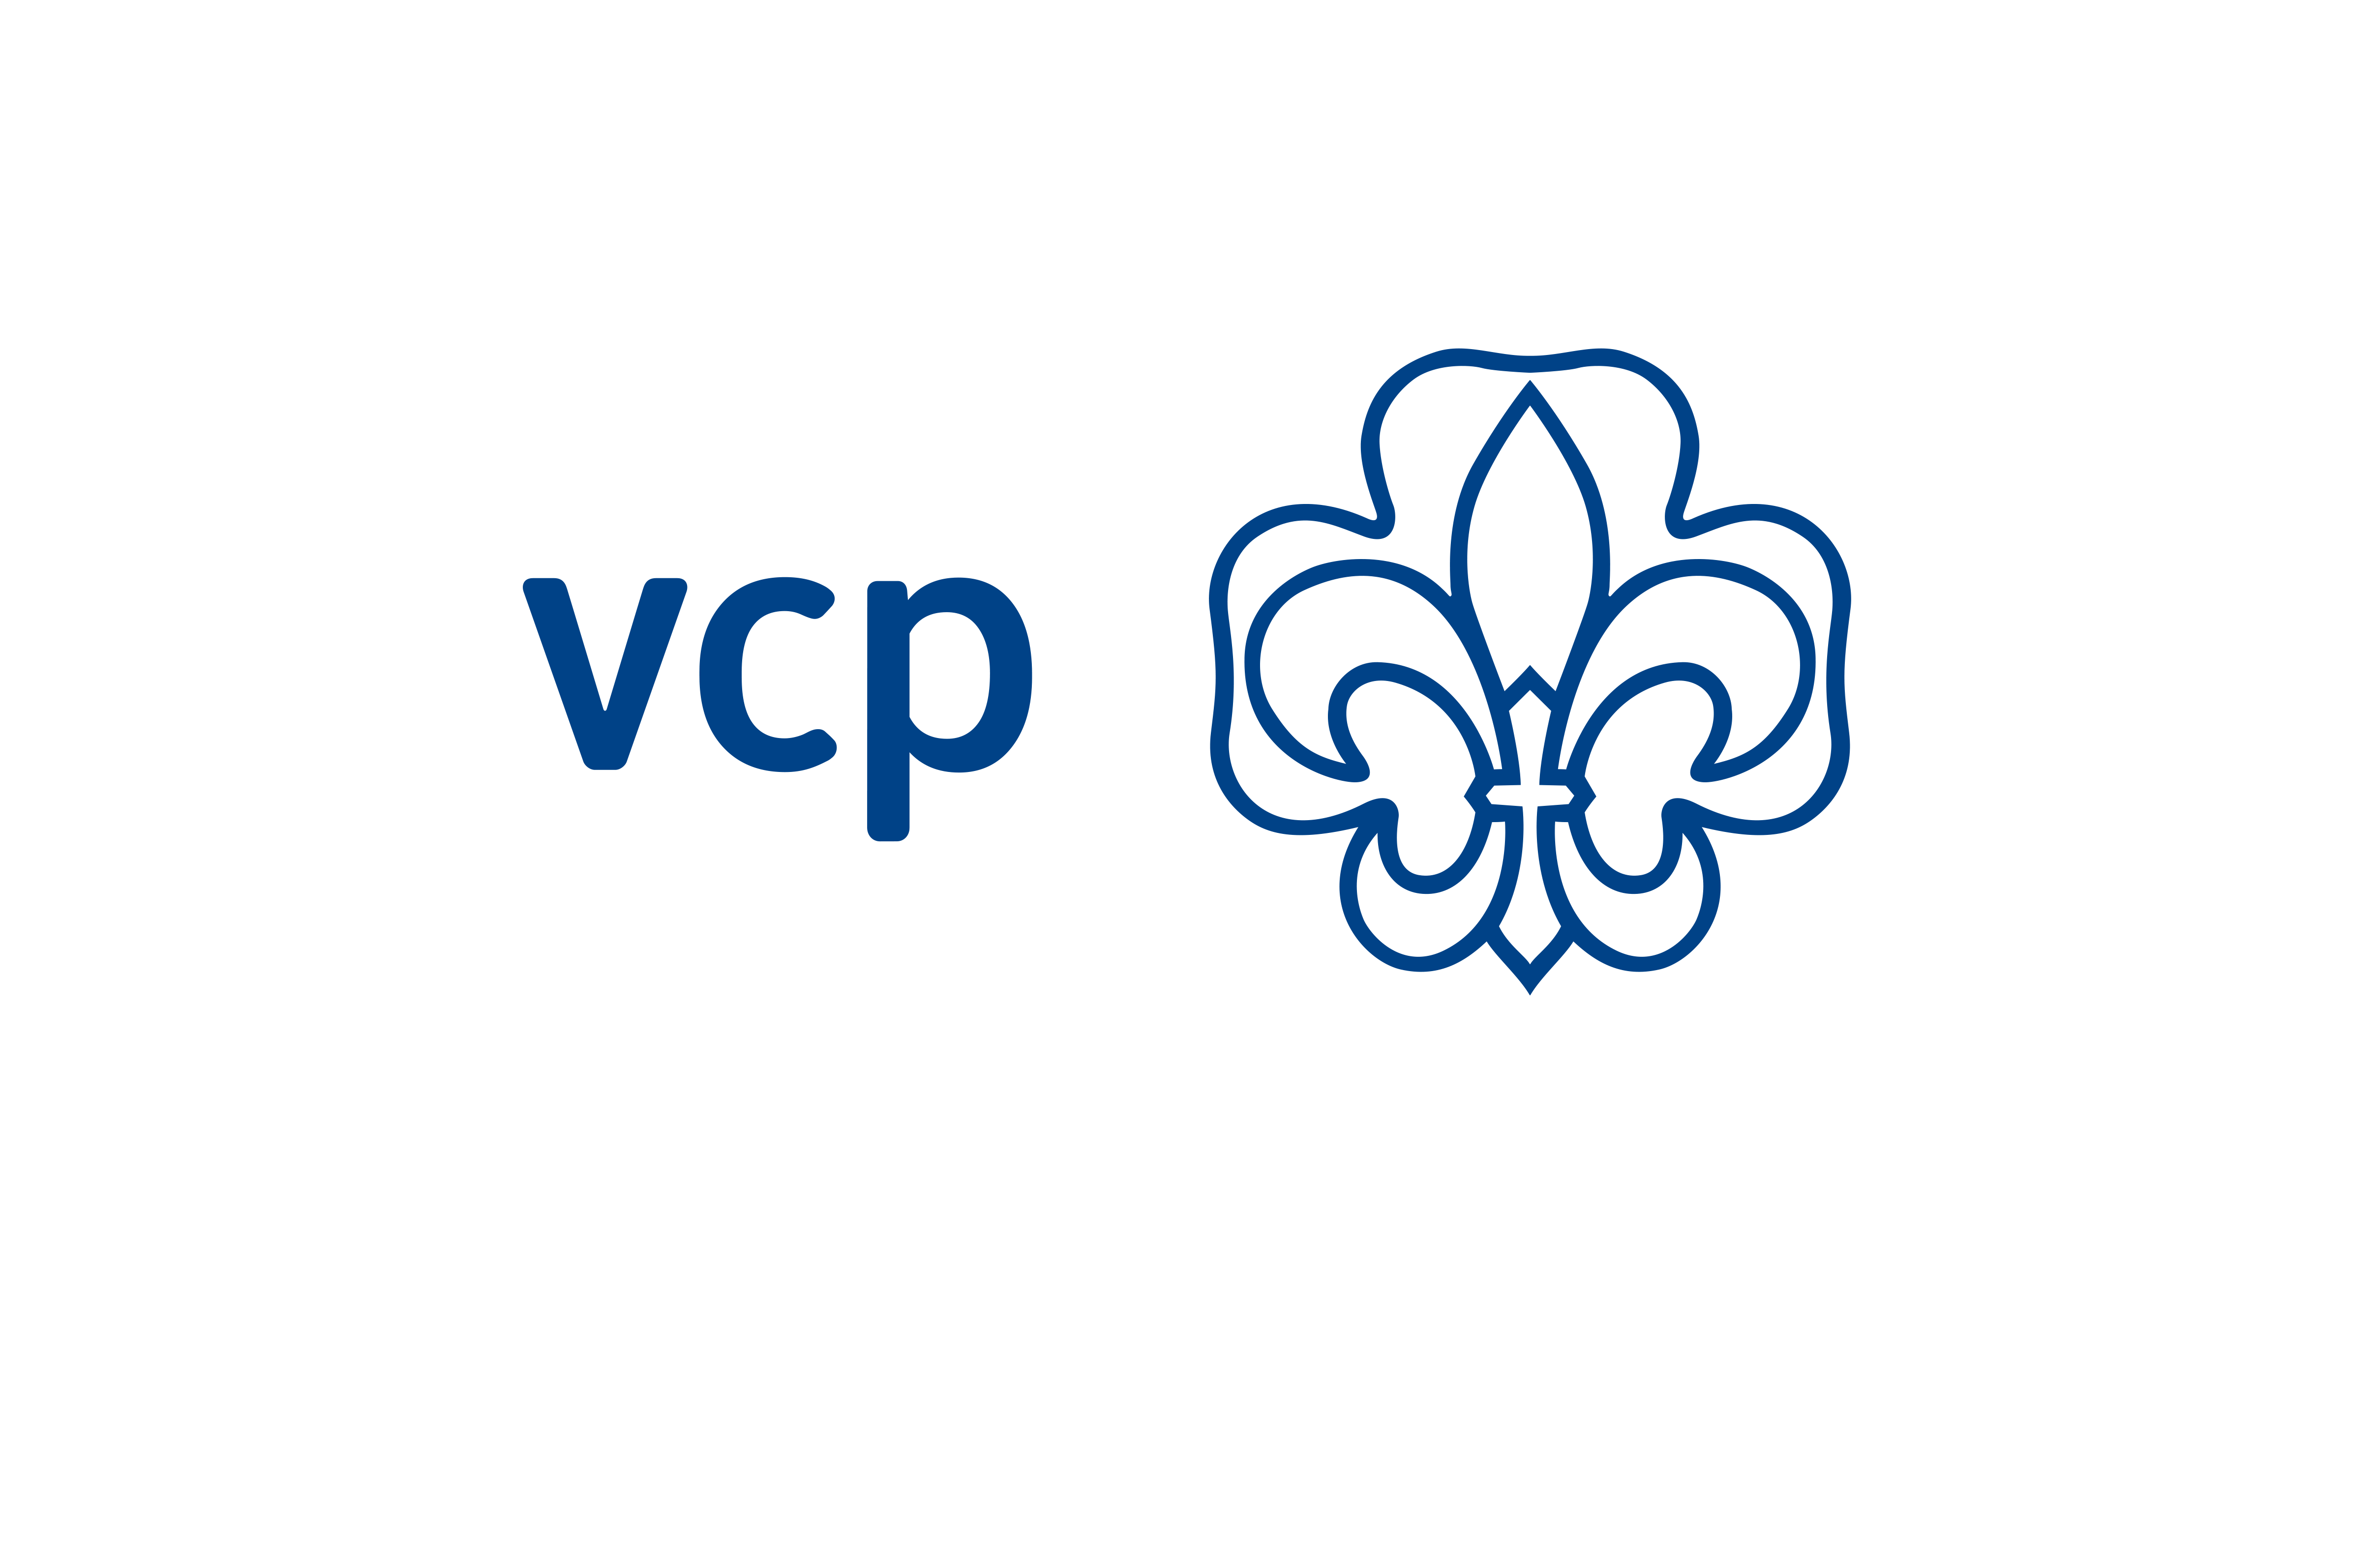 VCP Logo - VCP, Logo, Wortbildmarke